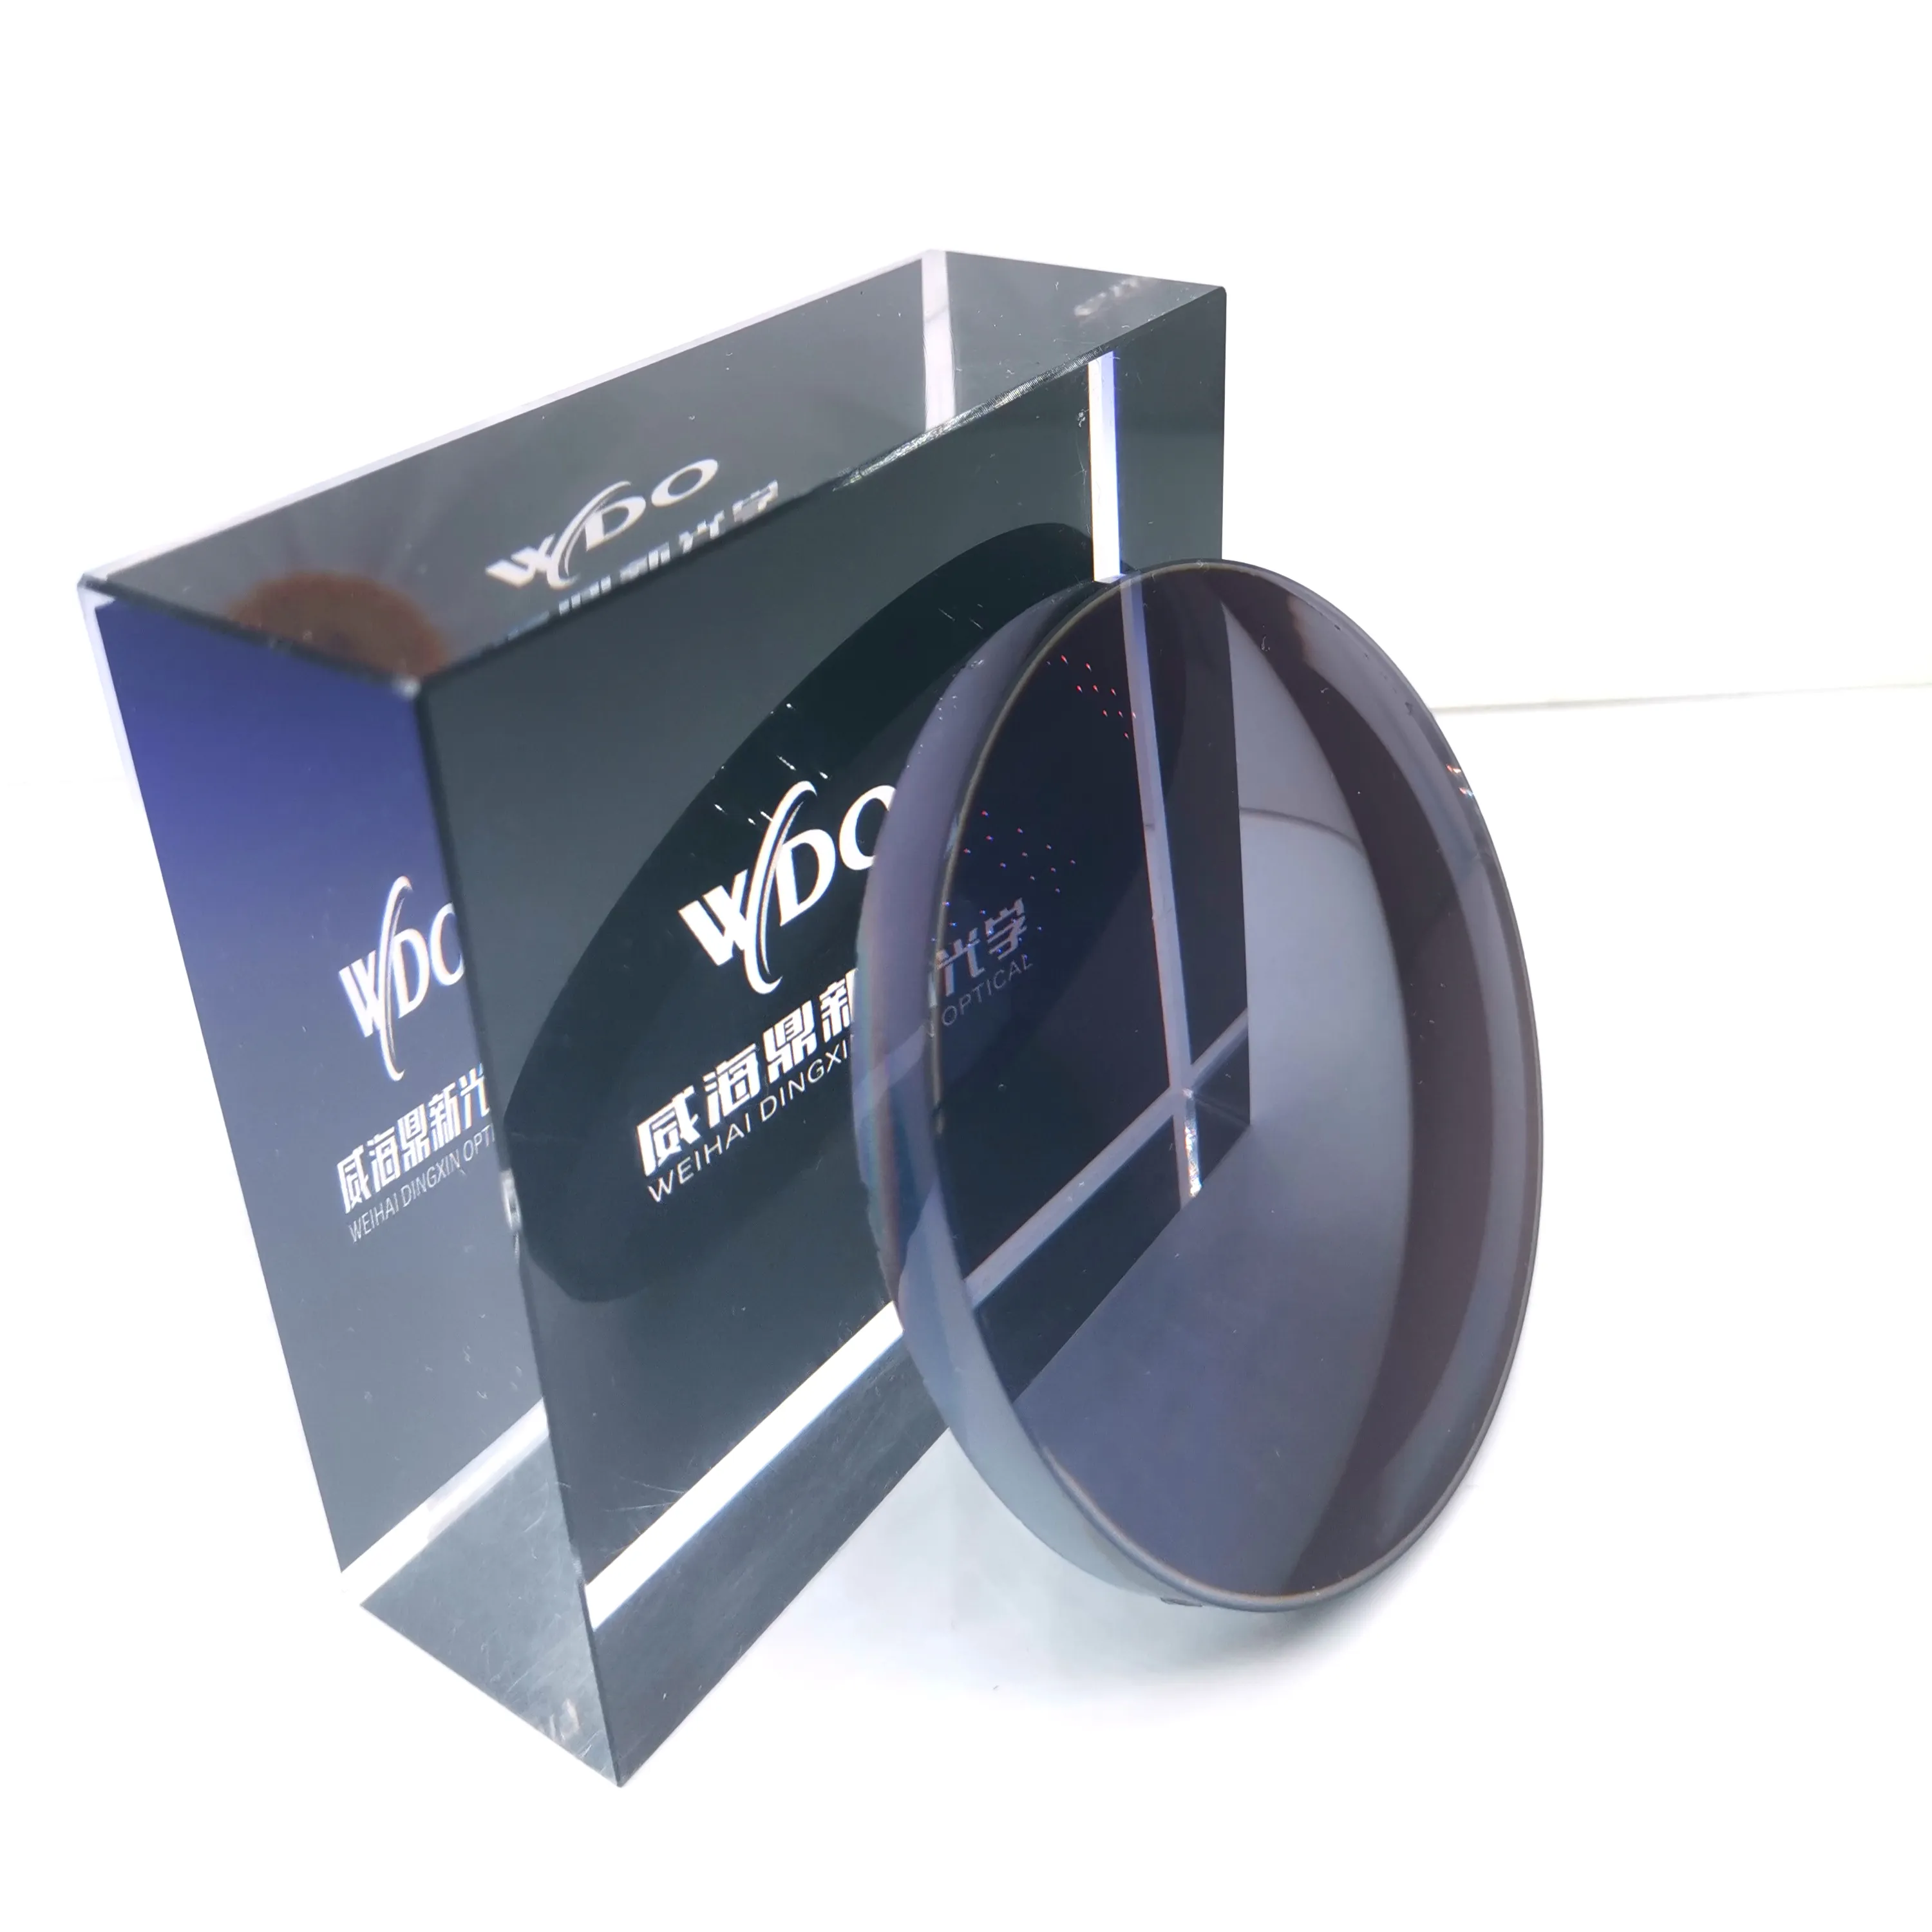 WDO 1.56 single vision glass photochromic anti blue ray glasses HMC lensa photocromic lenses lentes fotocromaticos